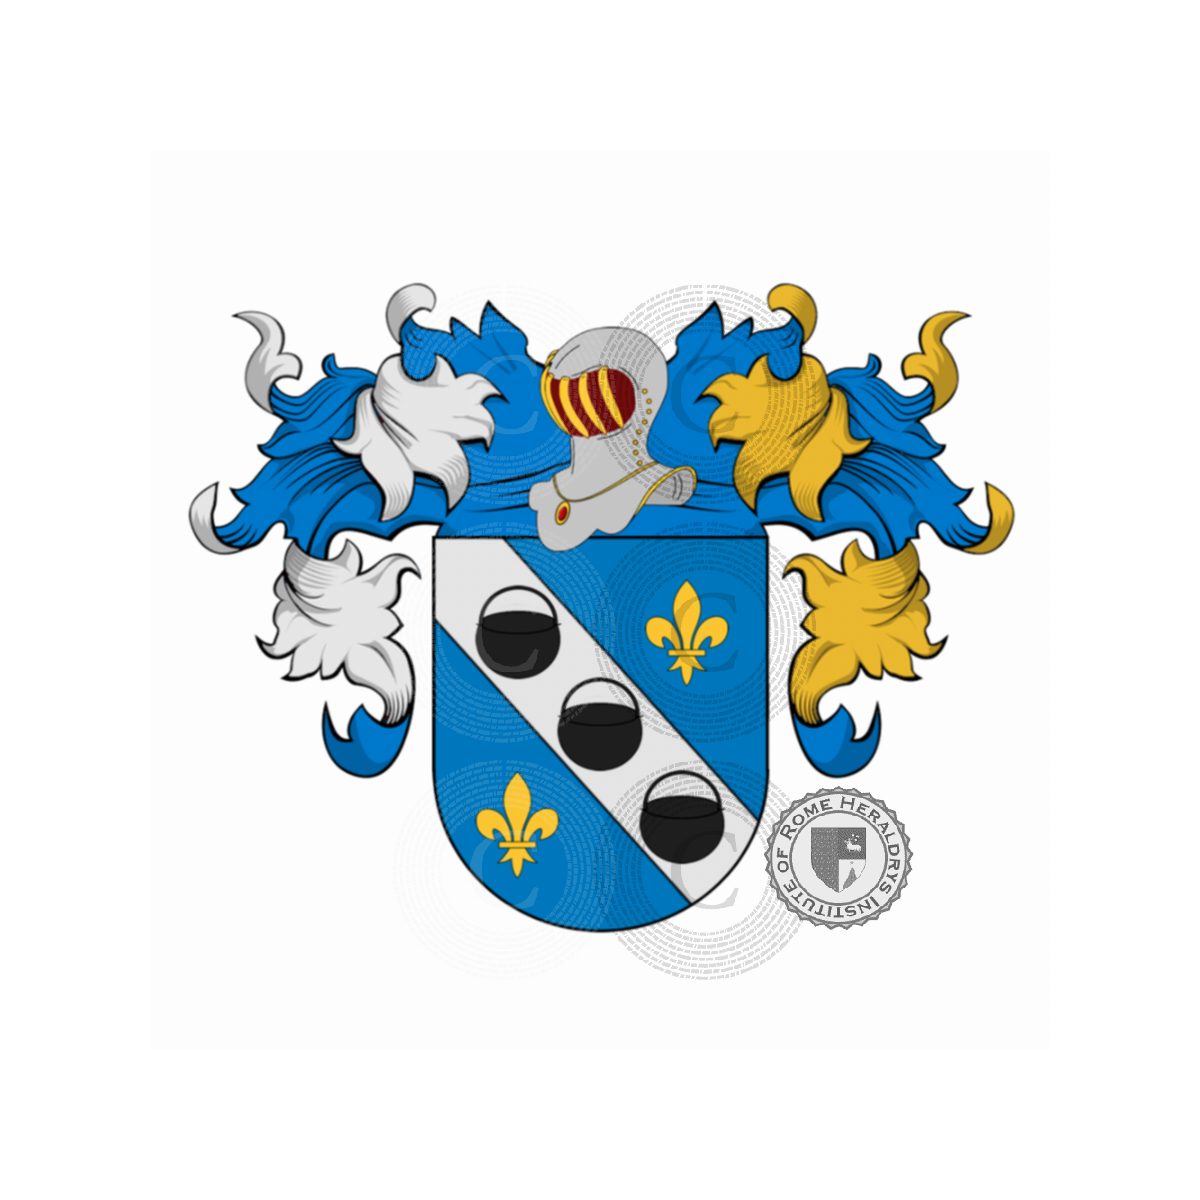 Coat of arms of familyCaldeira